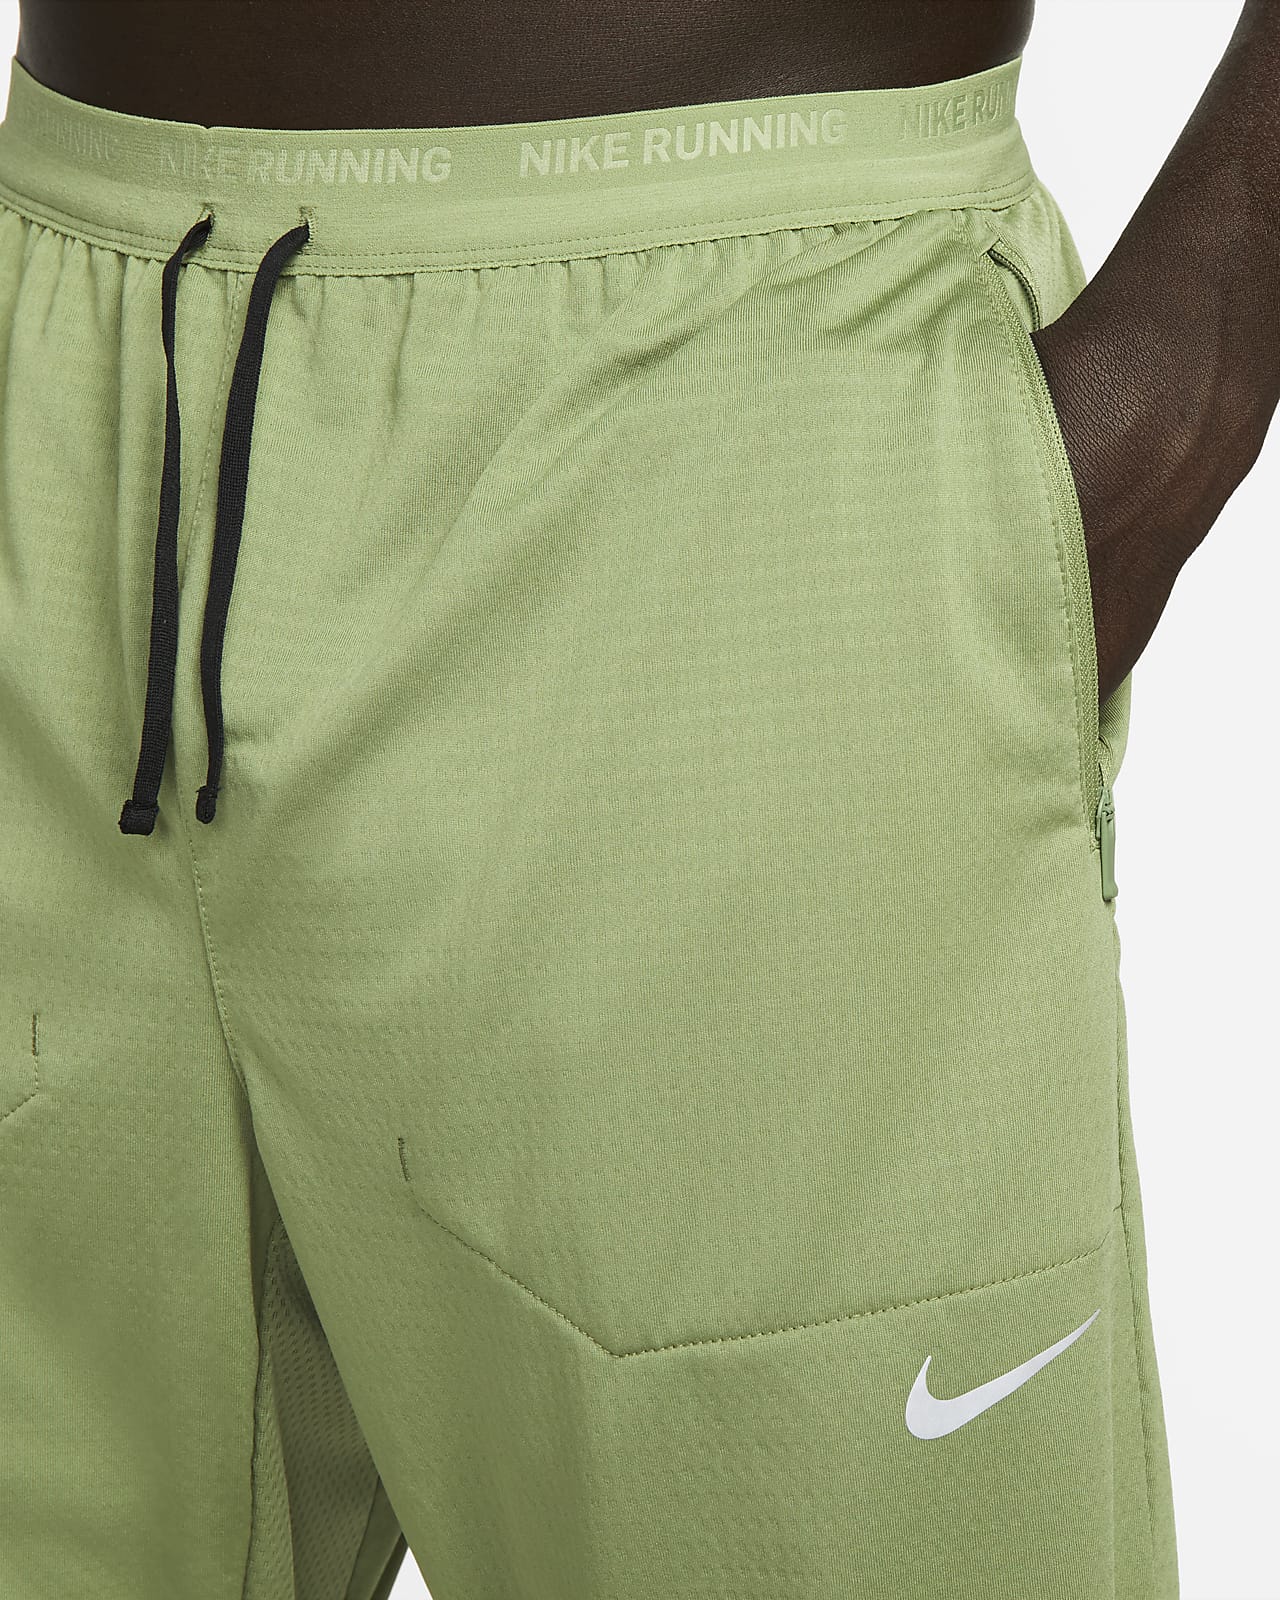 Nike Mens Phenom Elite Woven Pants - Green